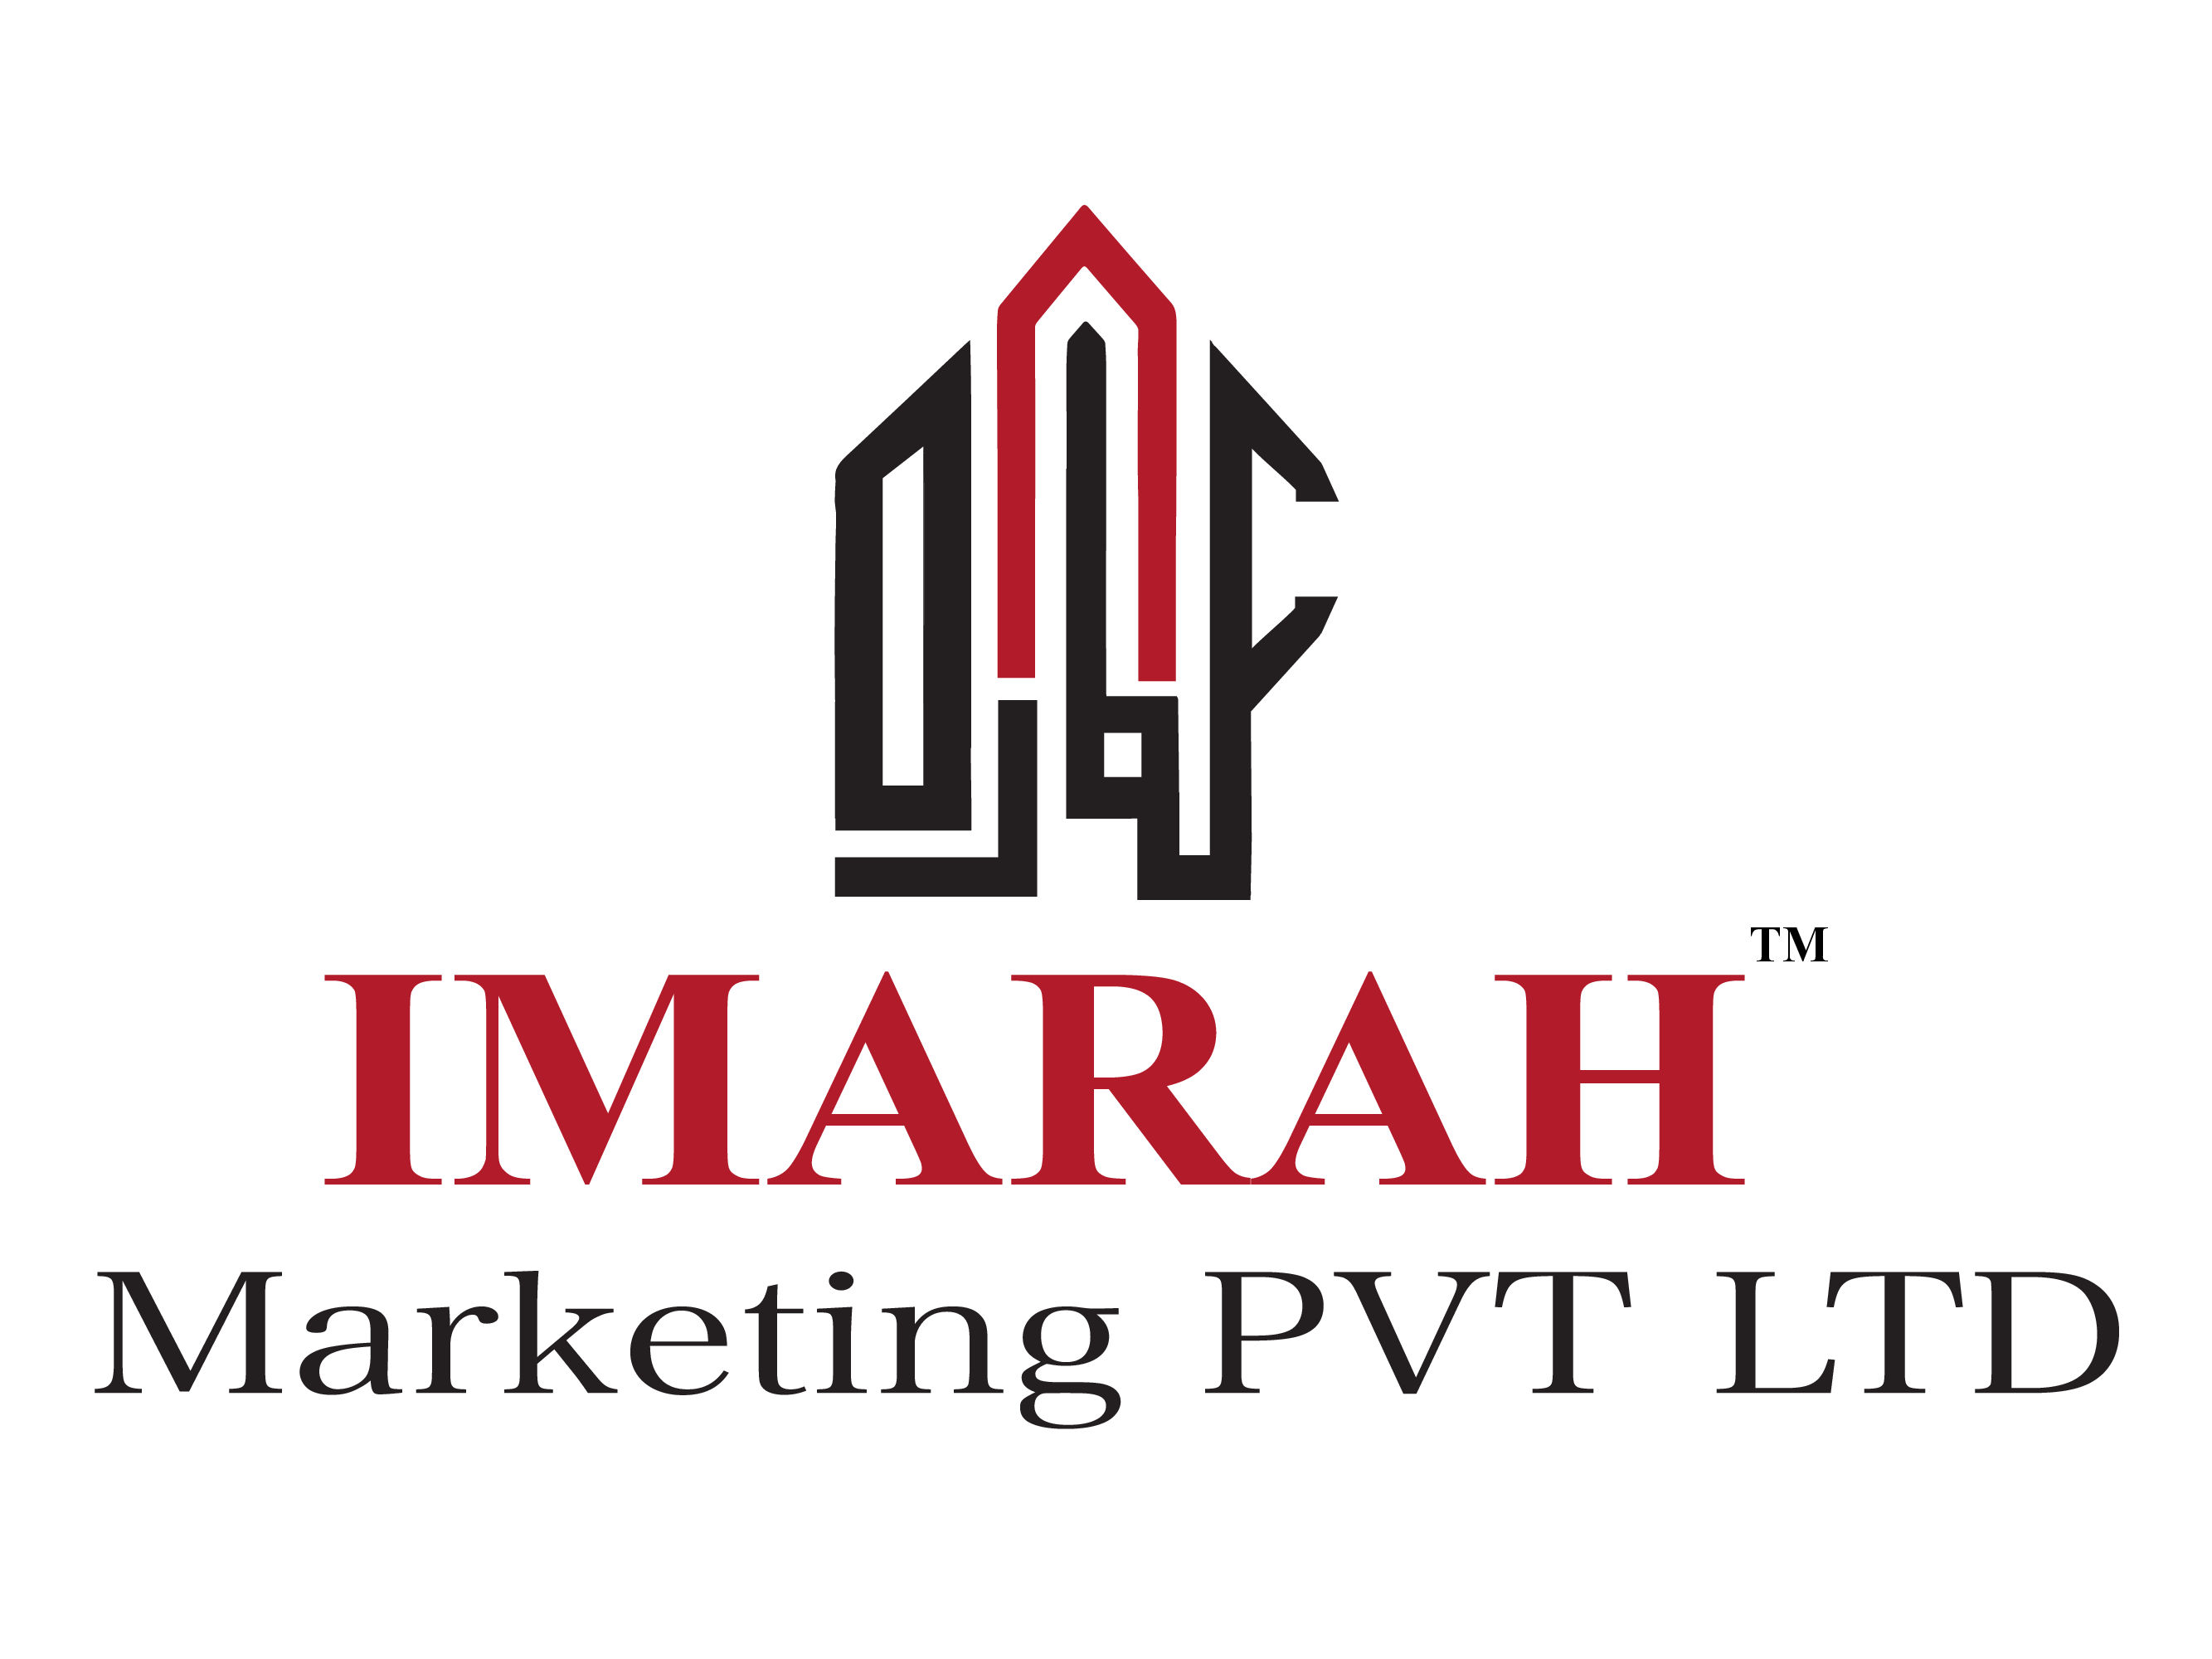 Imarah Marketing PVT LTD